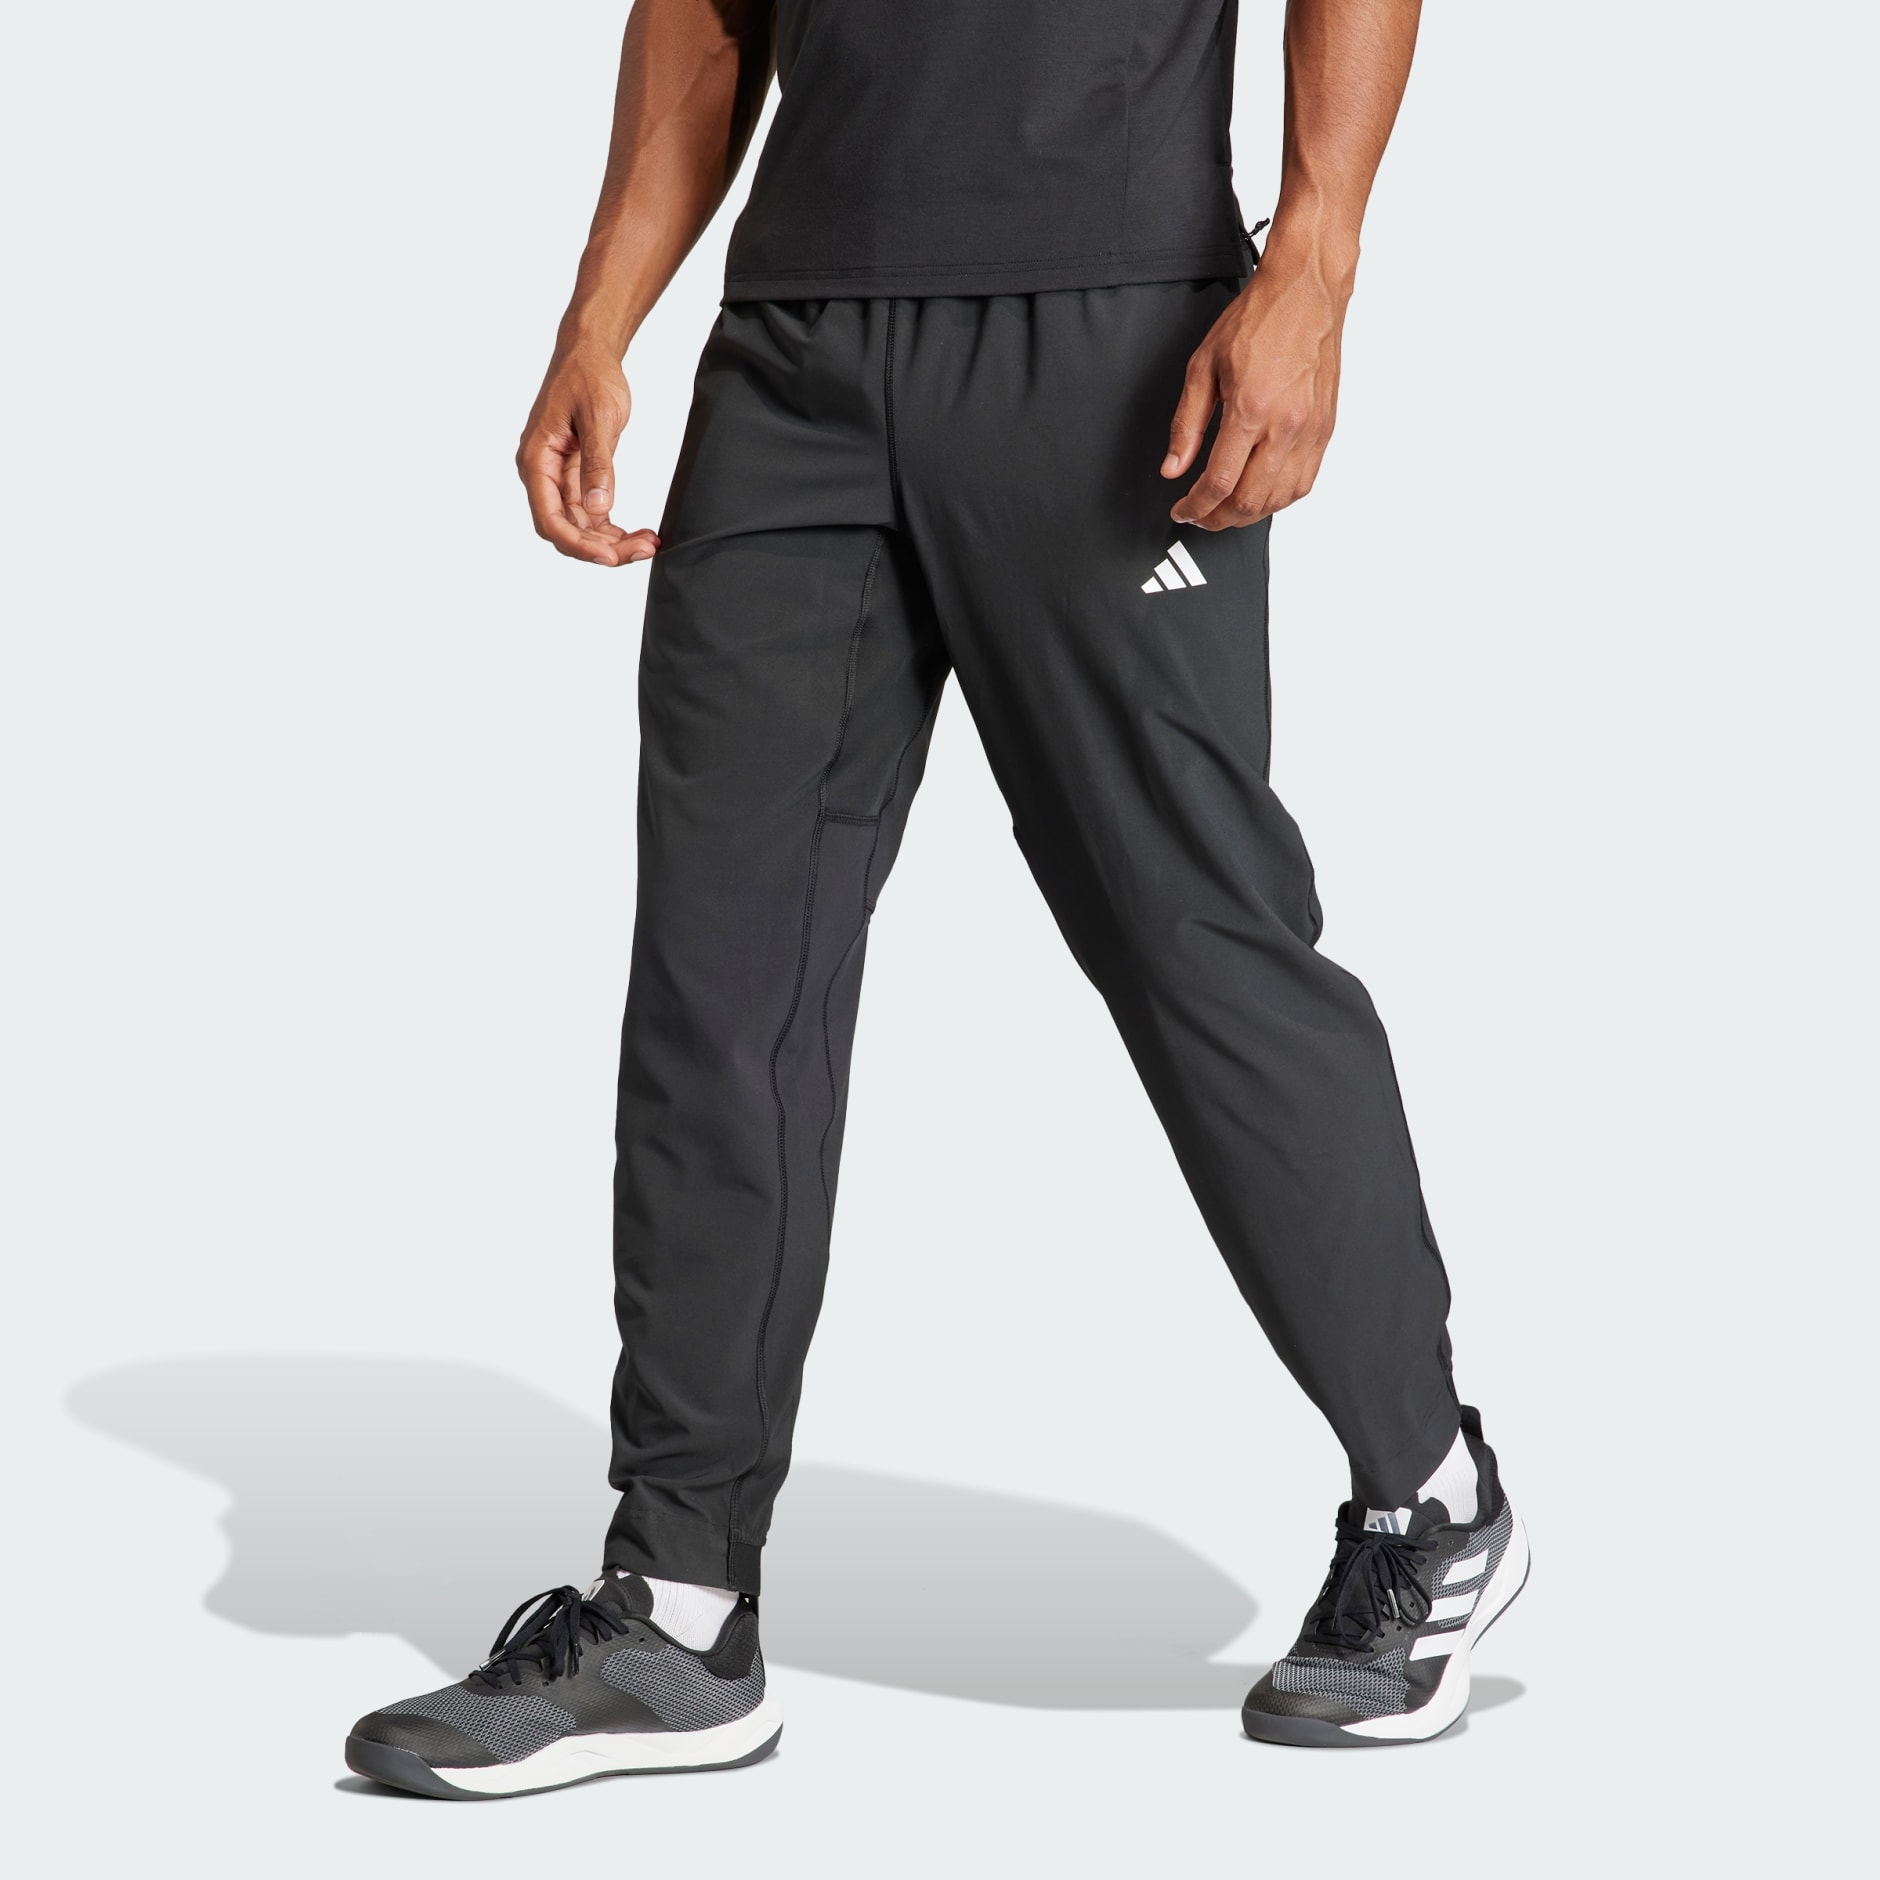 Adidas Men's Tiro19 Training Pant : : Clothing, Shoes & Accessories